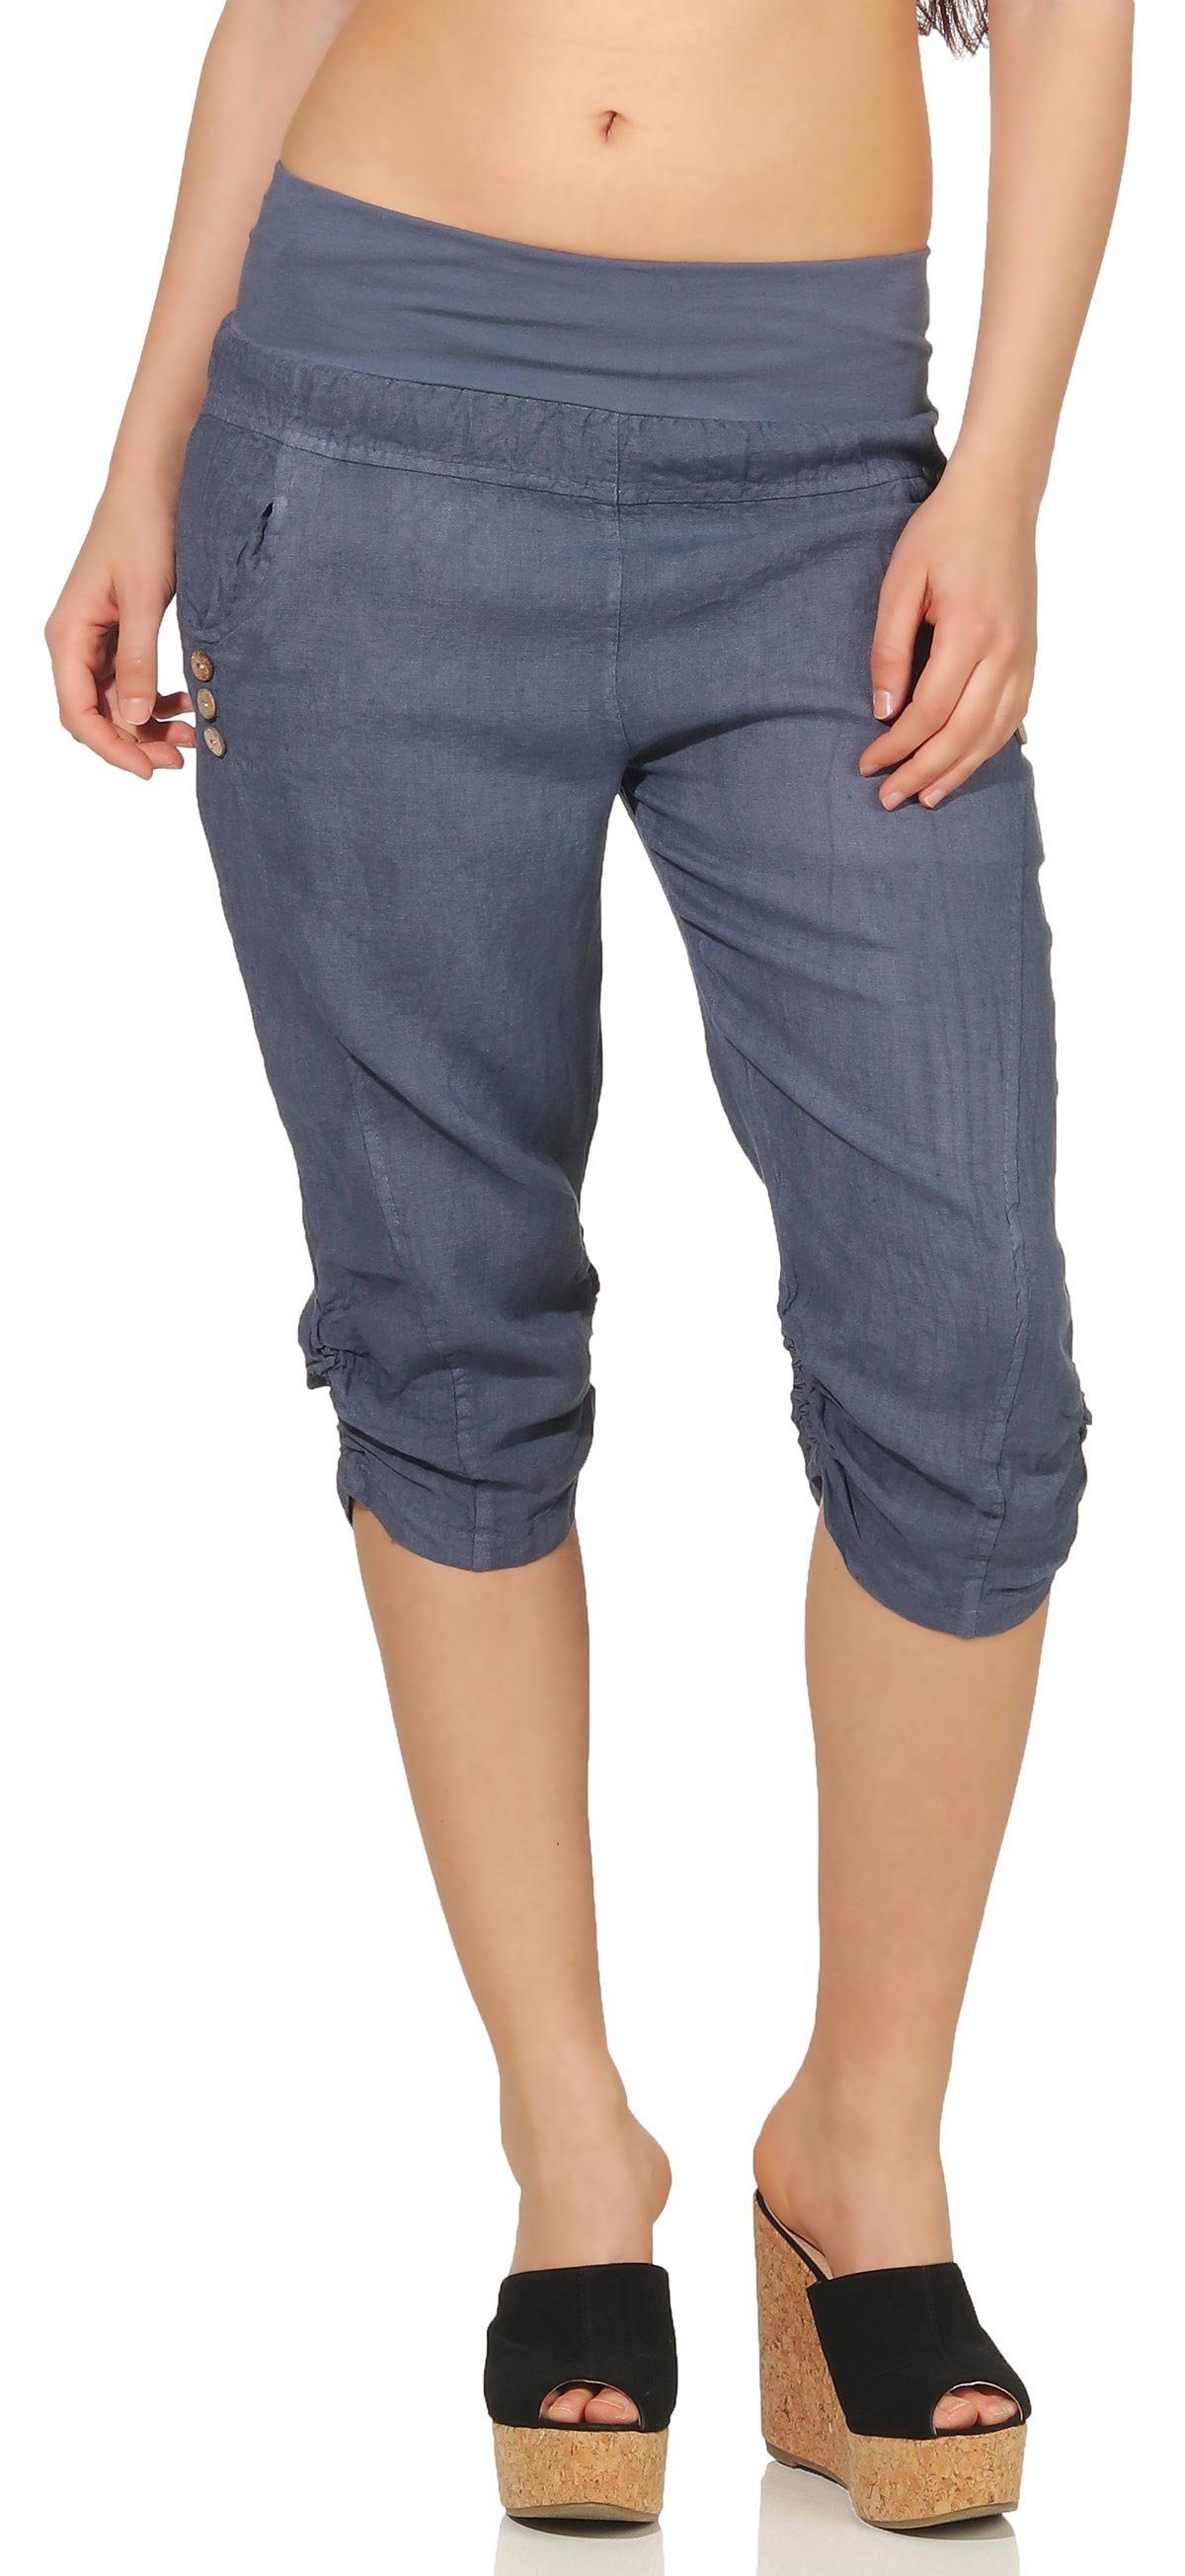 malito more than fashion Caprihose 7988 Capri Leinen Hose mit elastischem Bund jeansblau